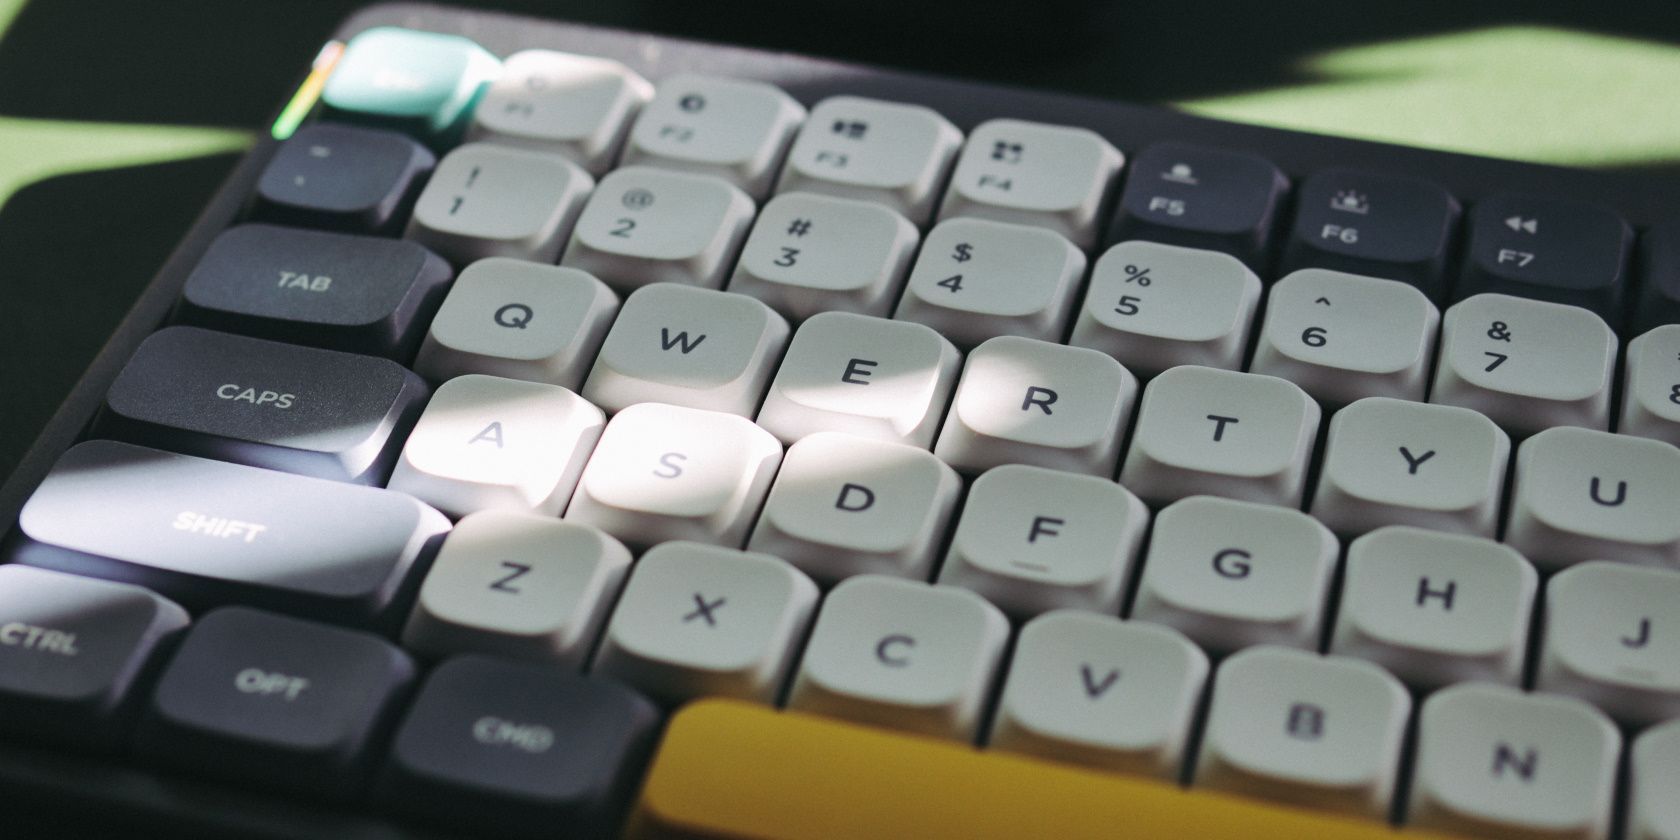 A keyboard has black and white keys